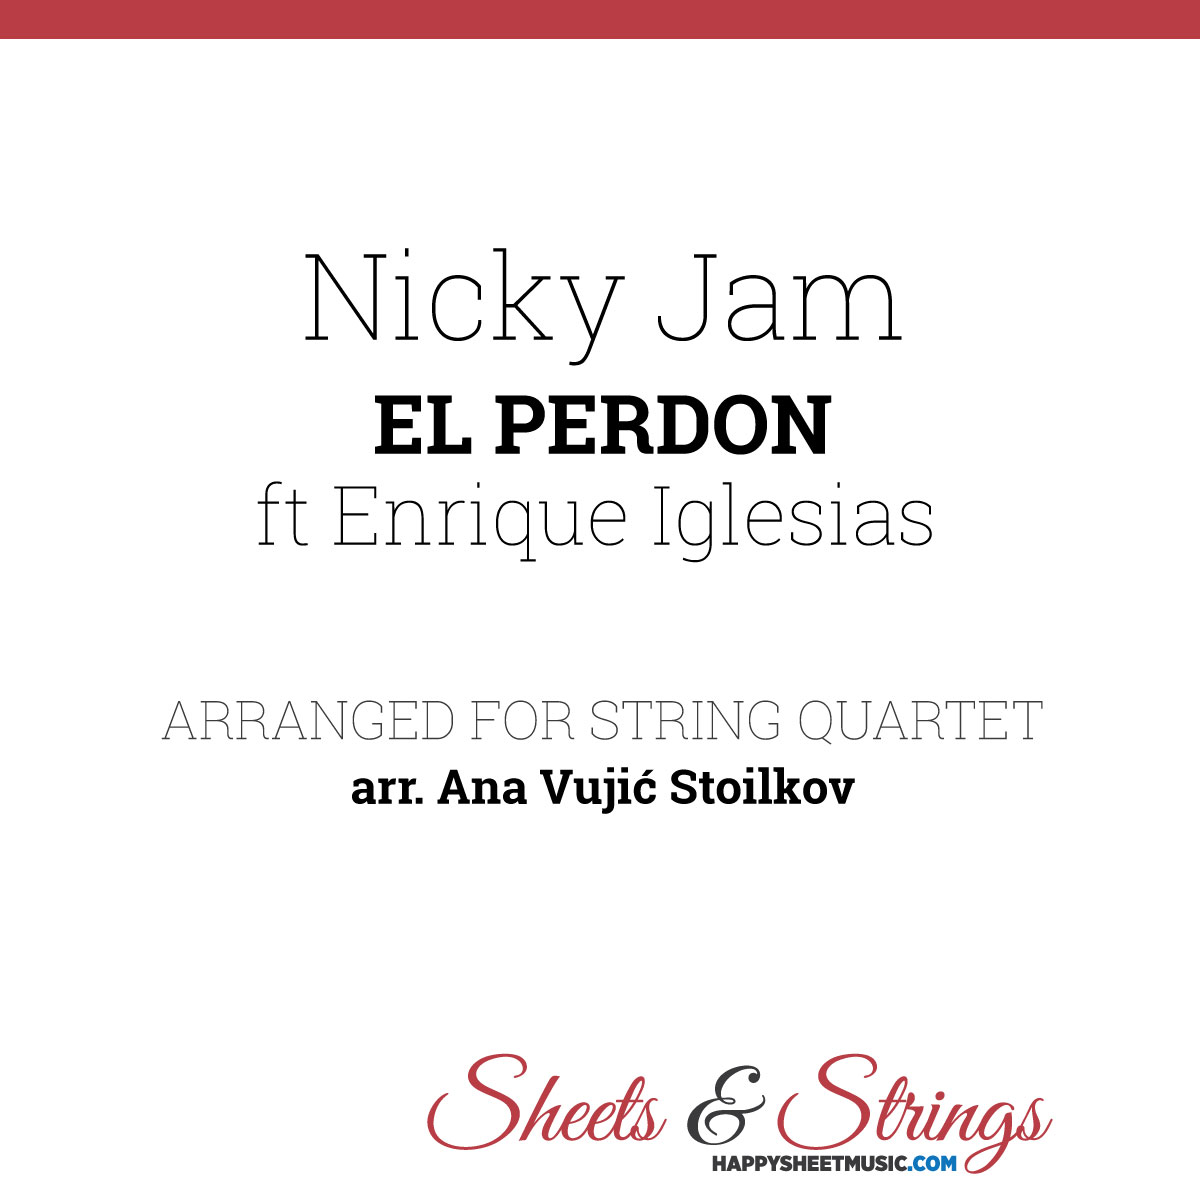 Nicky Jam ft Enrique Iglesias - El Perdon Sheet Music for 